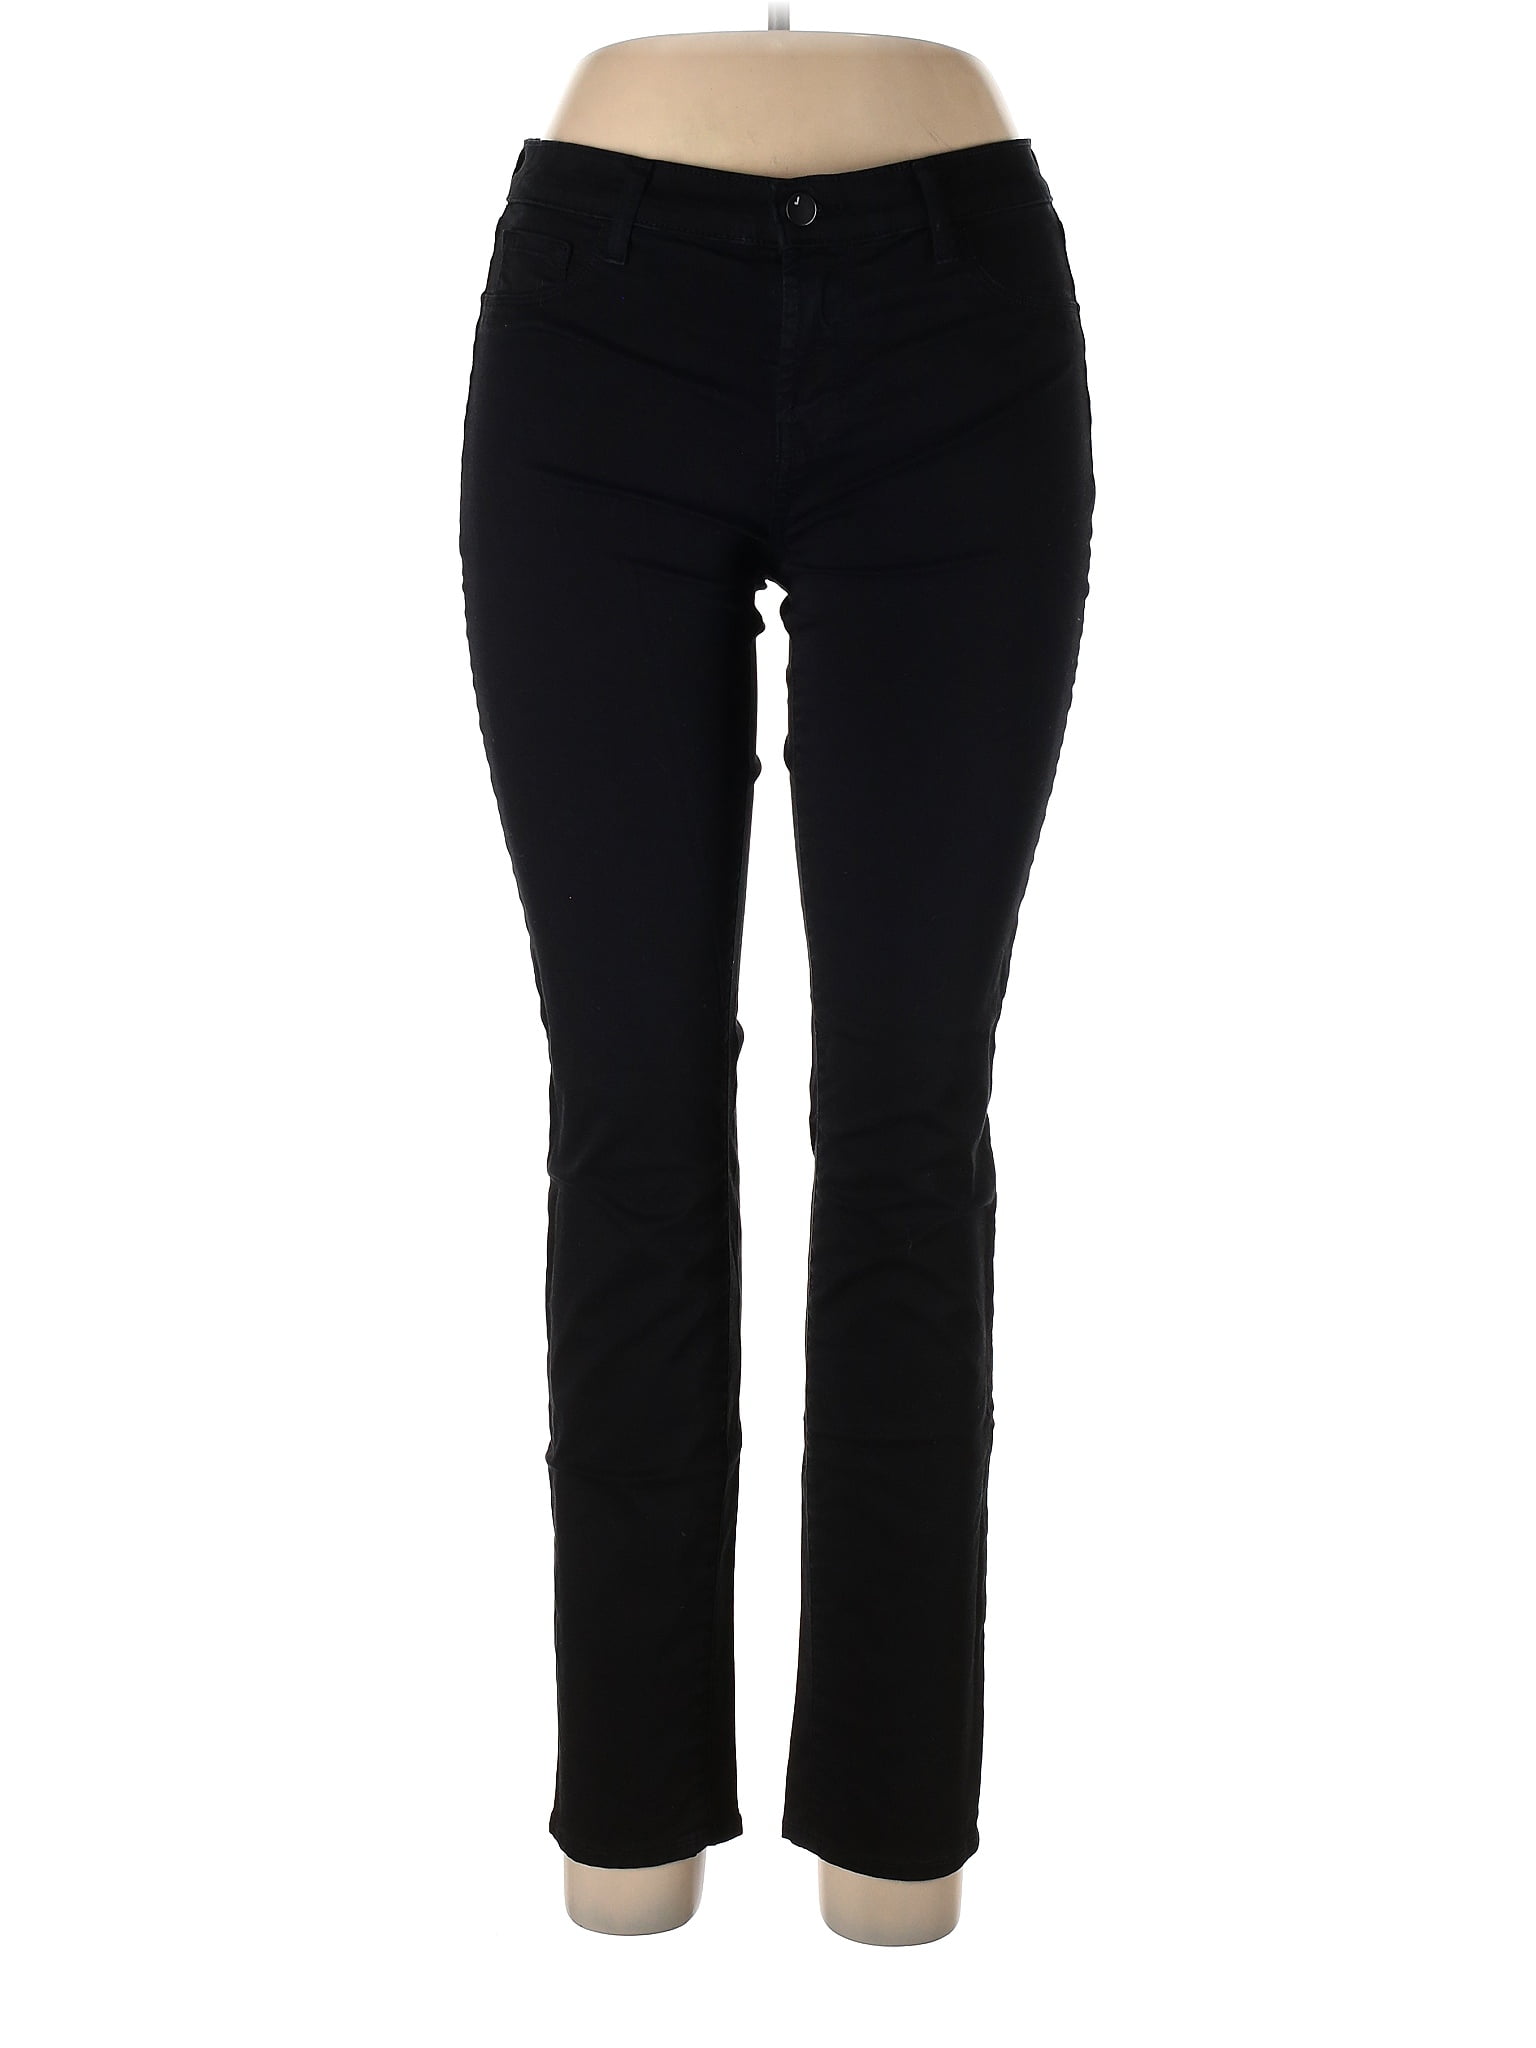 J Brand Solid Black Jeans 30 Waist - 88% off | ThredUp